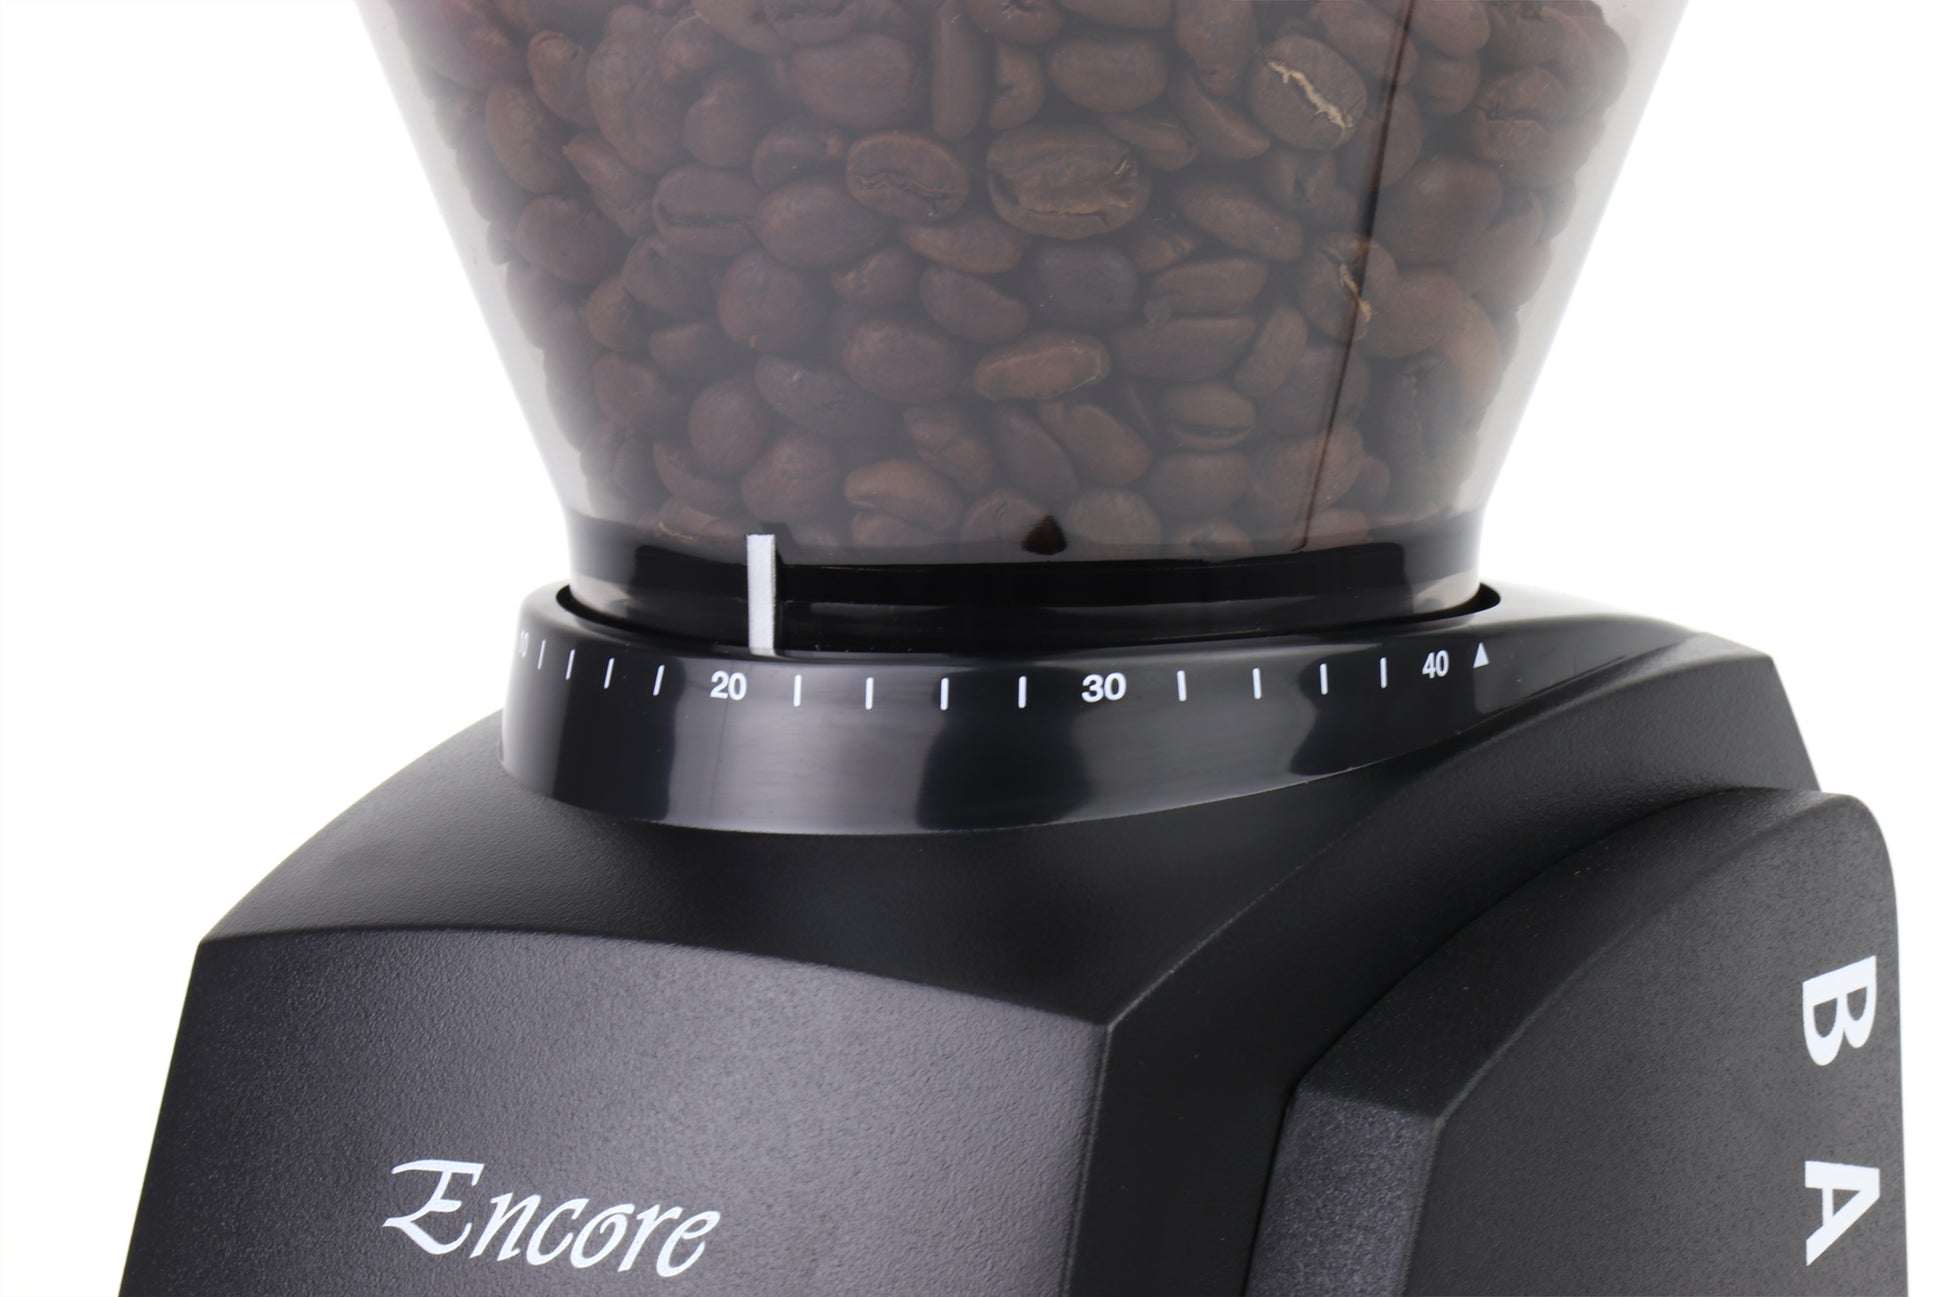 Conical Burr Coffee Grinder - Matte Black